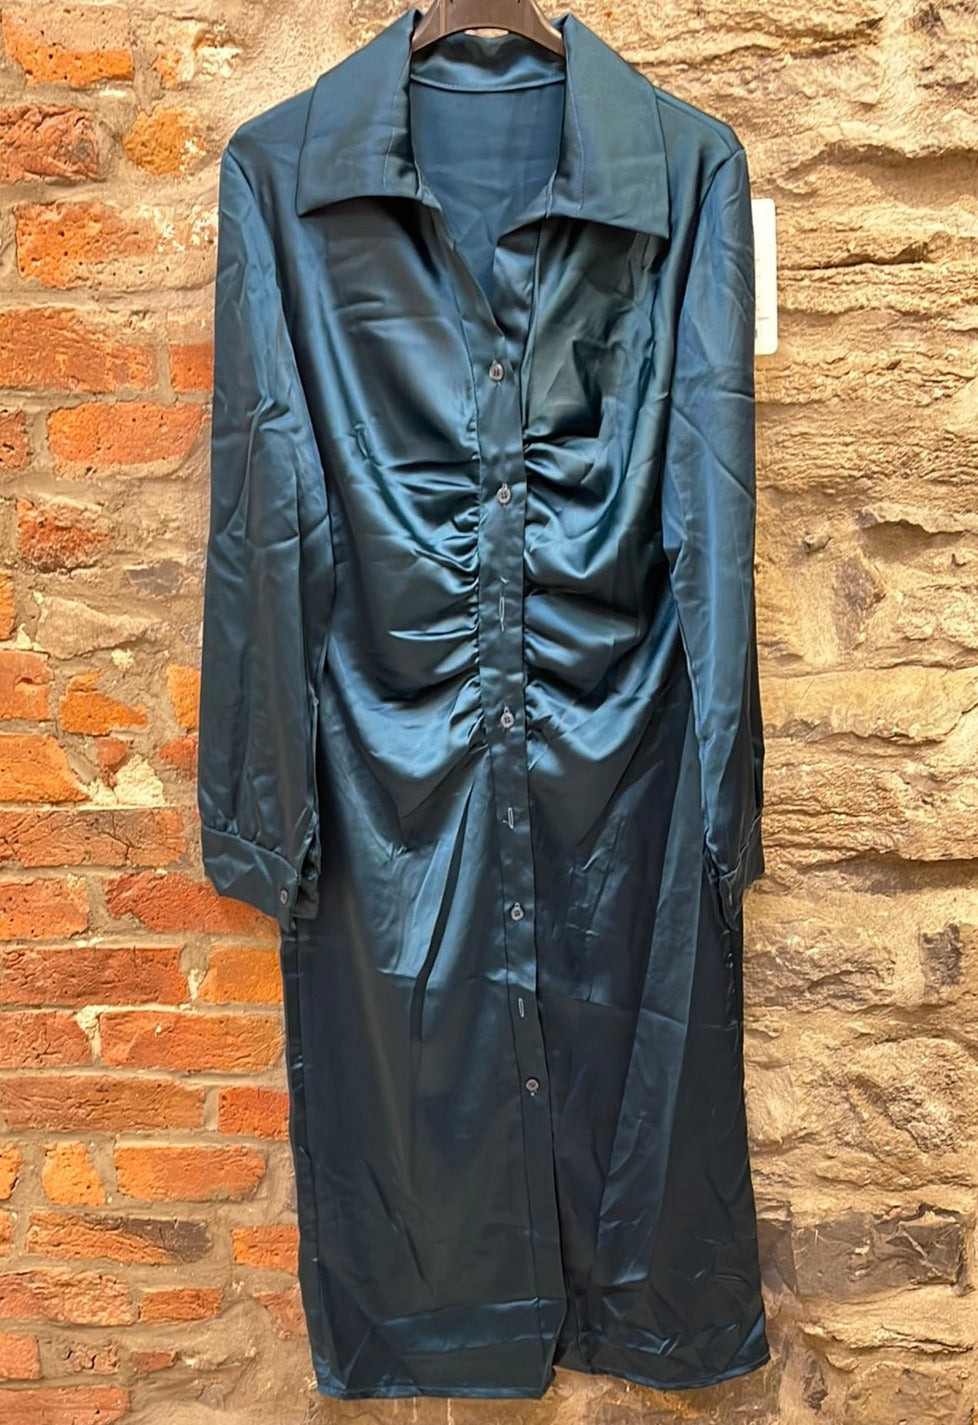 LS- 25359 Robe / Dress